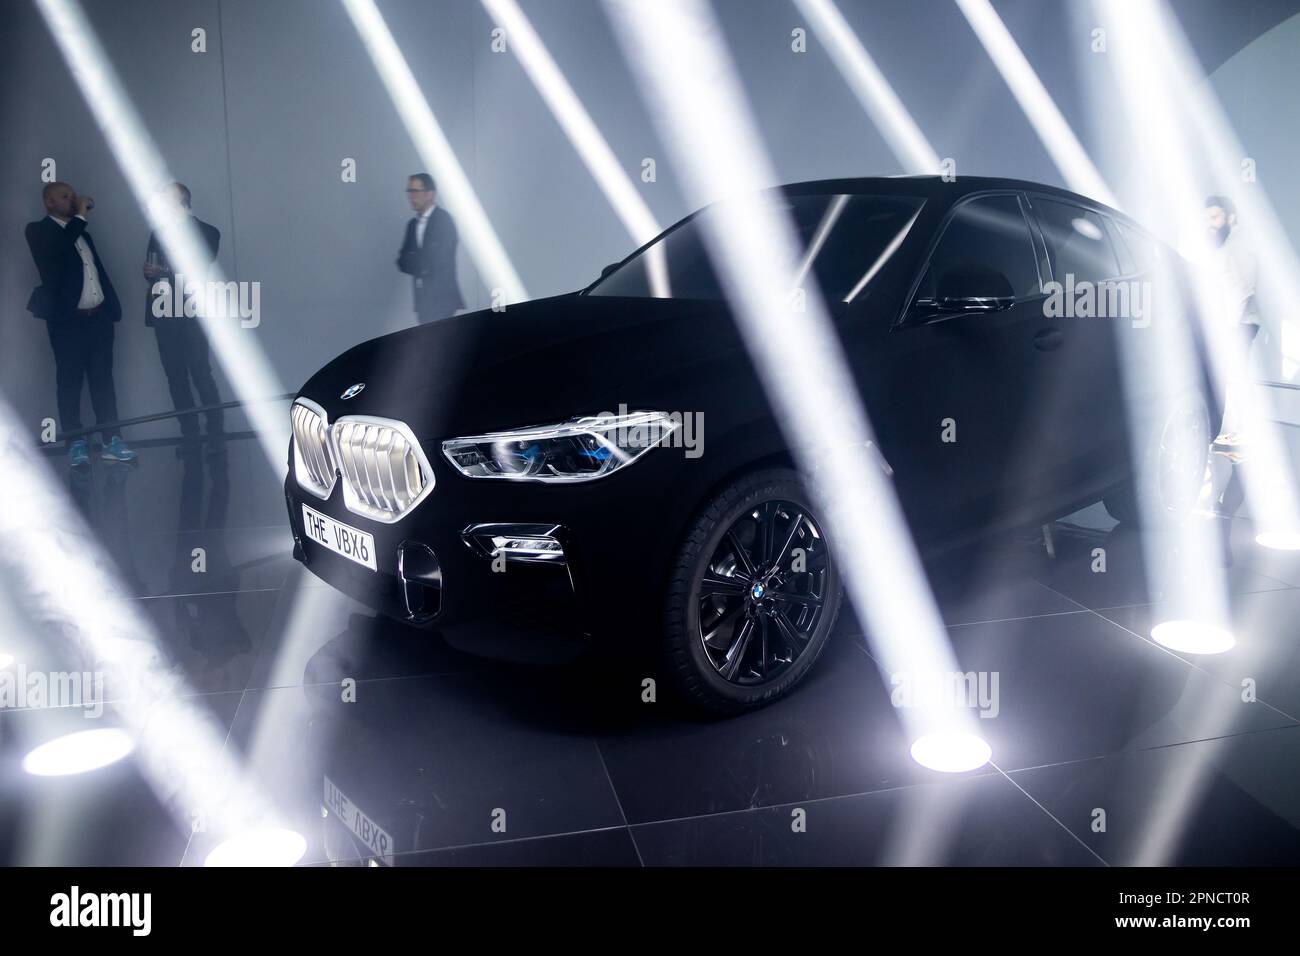 Datei:BMW X6 front.jpg – Wikipedia